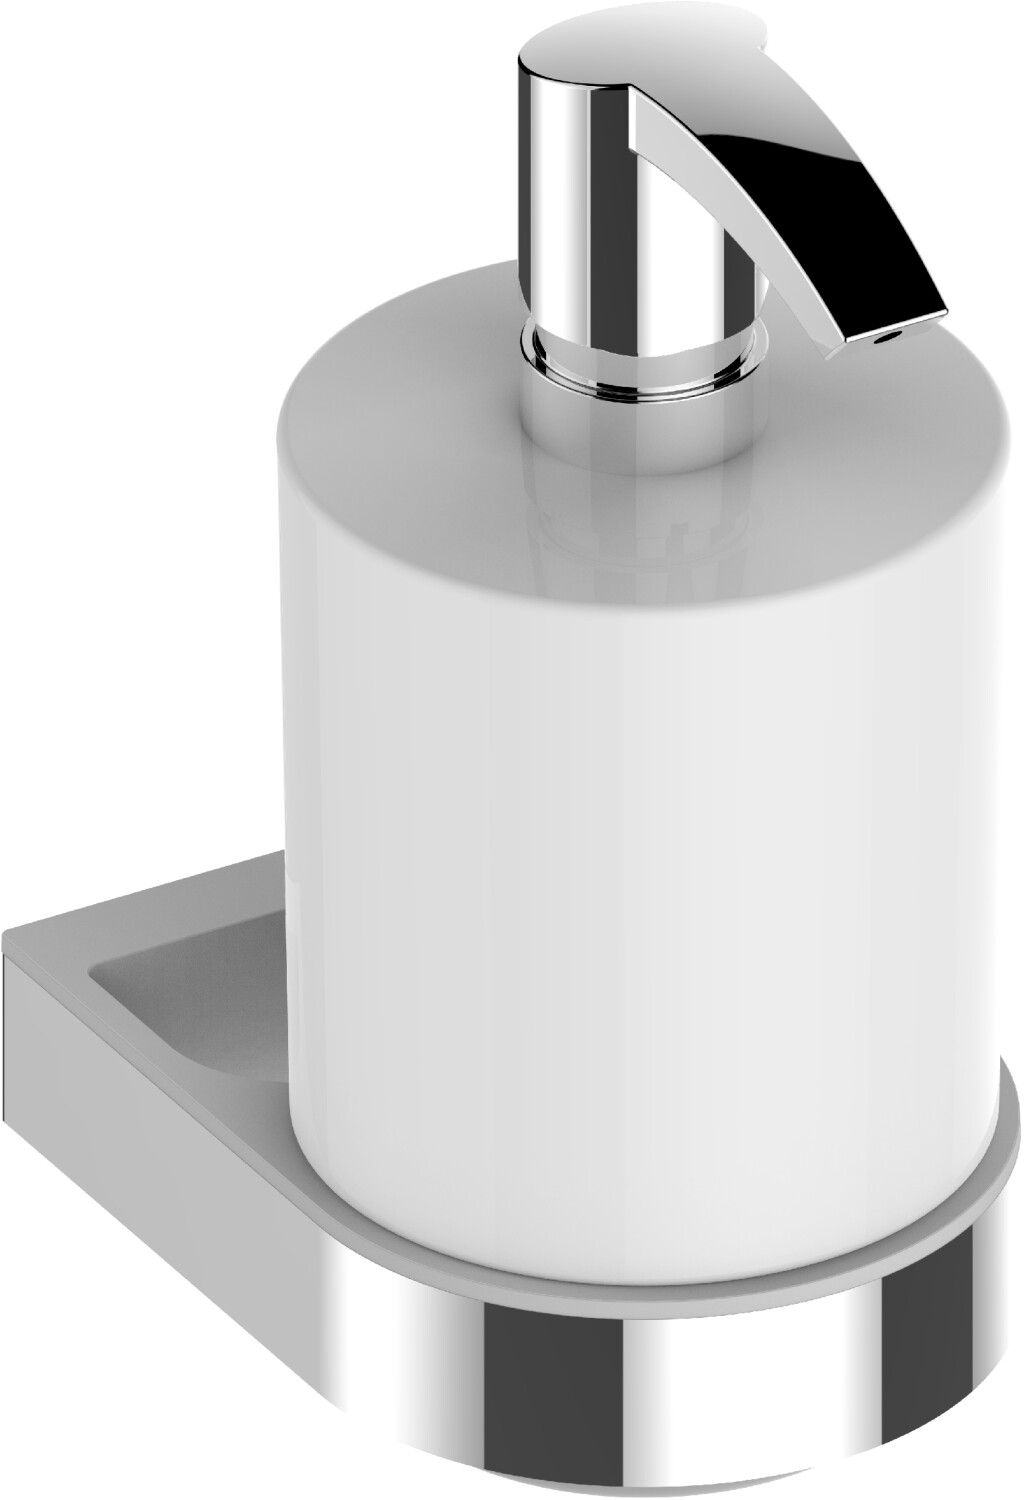 KEUCO Smart.2 Lotionspender chrom / weiß (14752010100) ab 34,99 € |  Preisvergleich bei